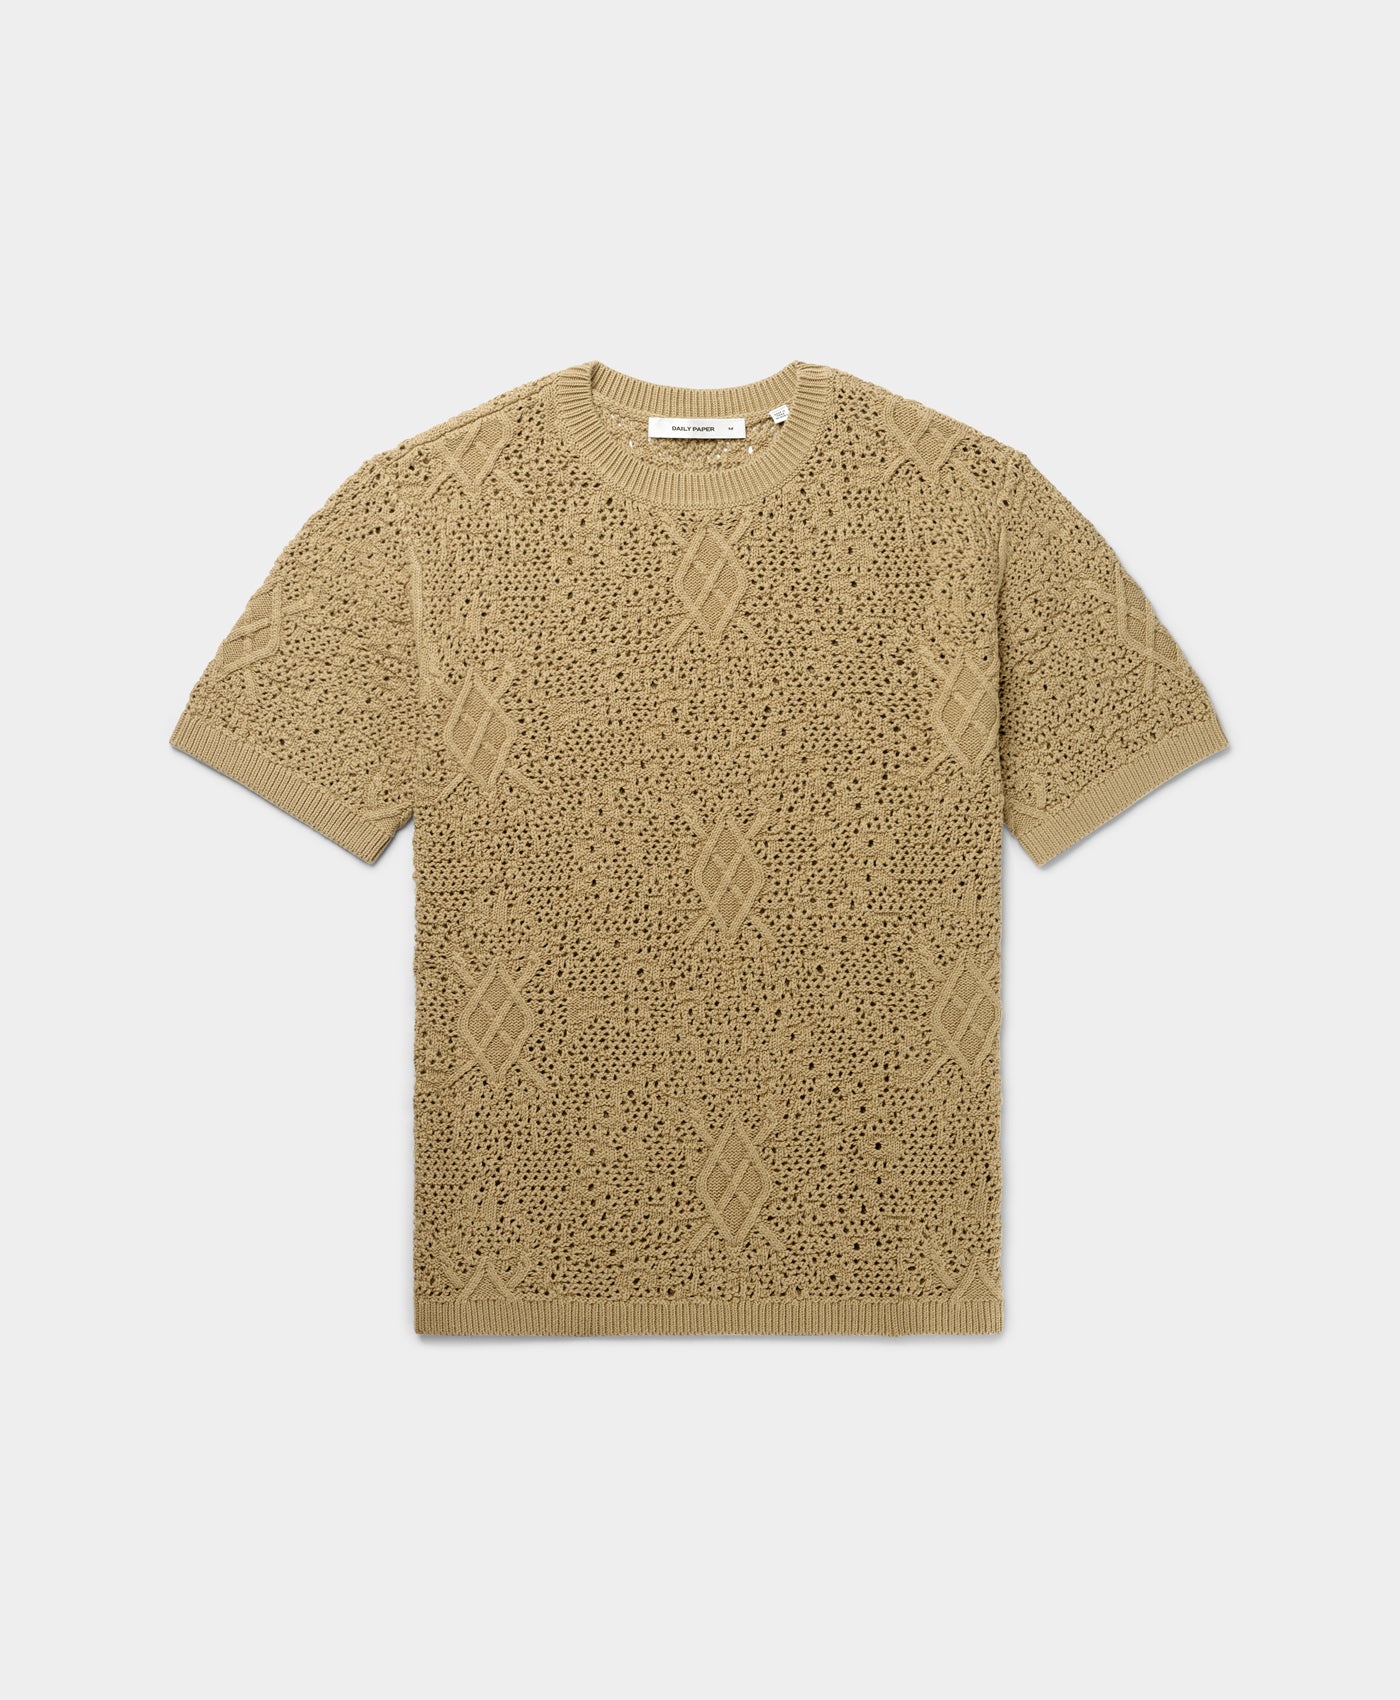 DP - Twill Beige Shield Crochet T-Shirt - Packshot - Front